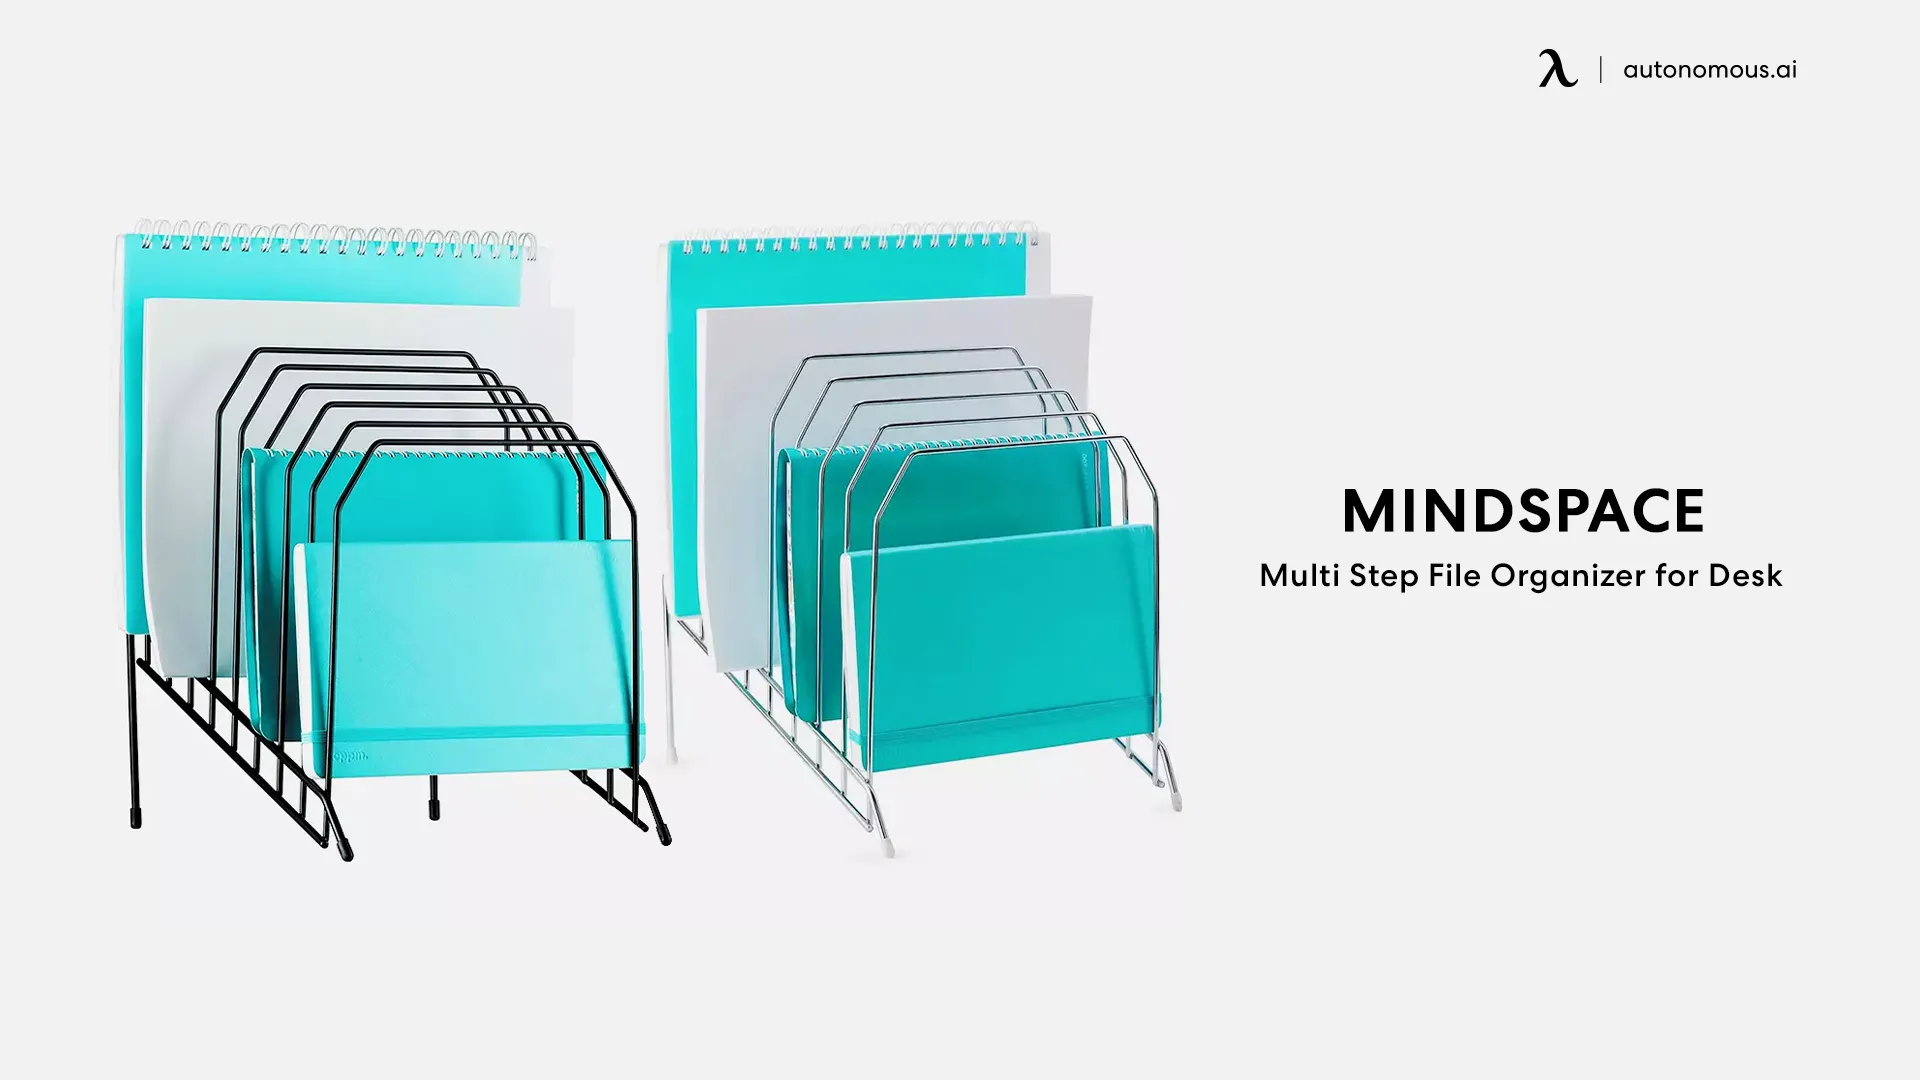 Mindspace’s Multi Step File Organizer for a Desk